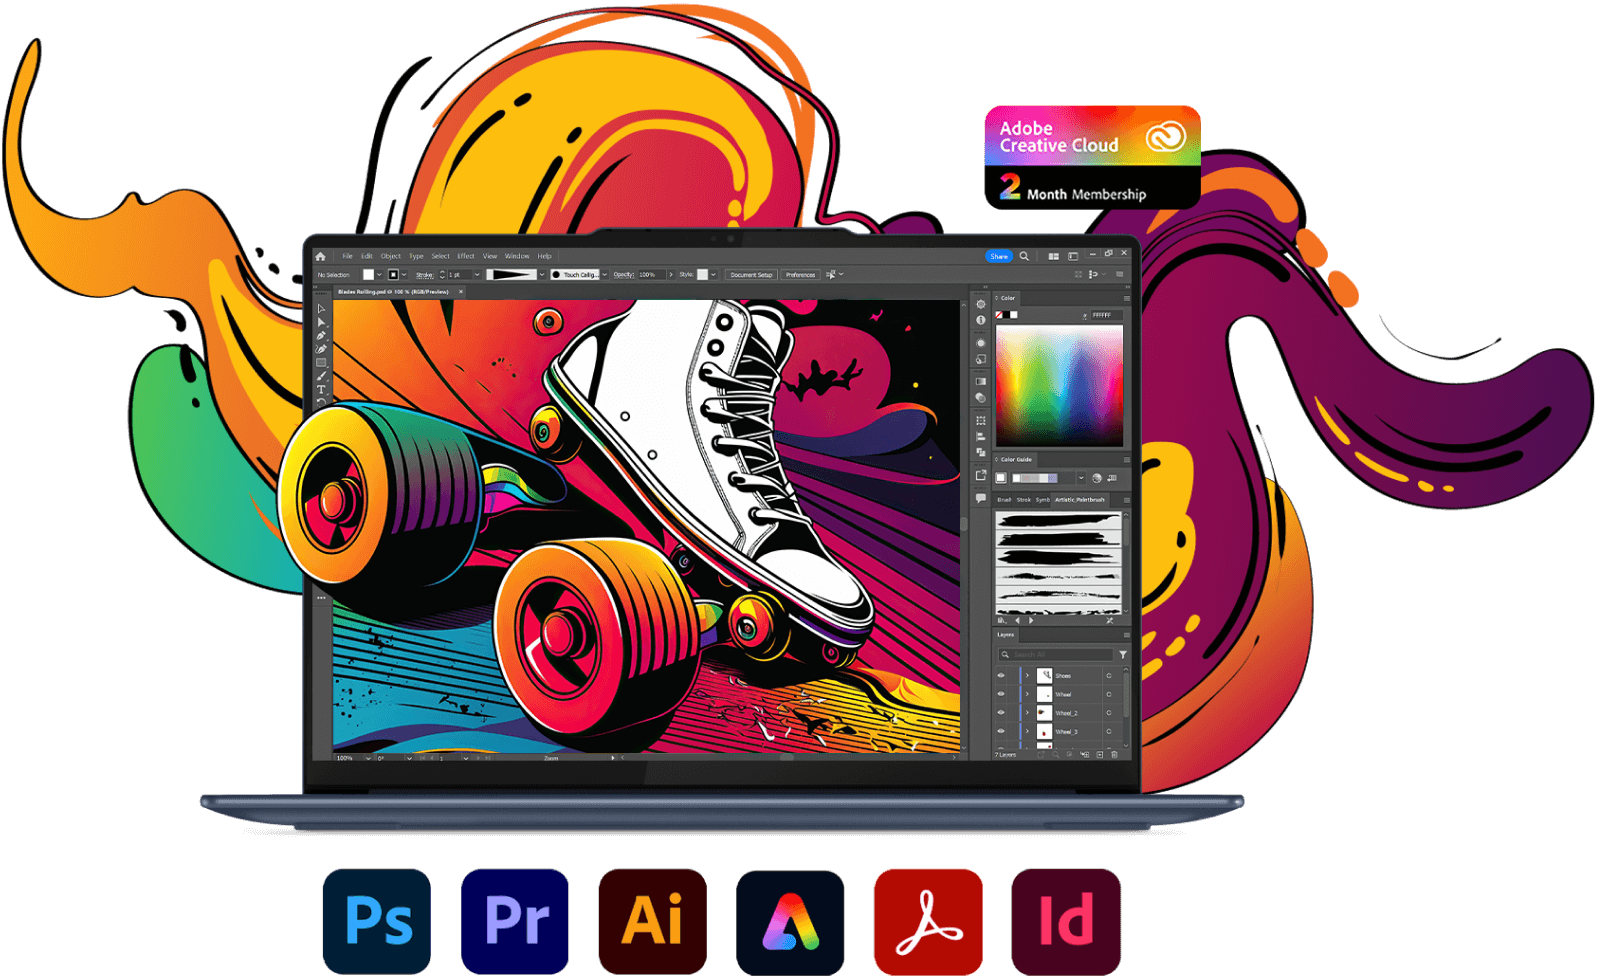 Lenovo Yoga 筆記簿型電腦朝向正面，畫面上顯示 Photoshop，另有多個 Adobe Creative Cloud 應用程式的圖示。